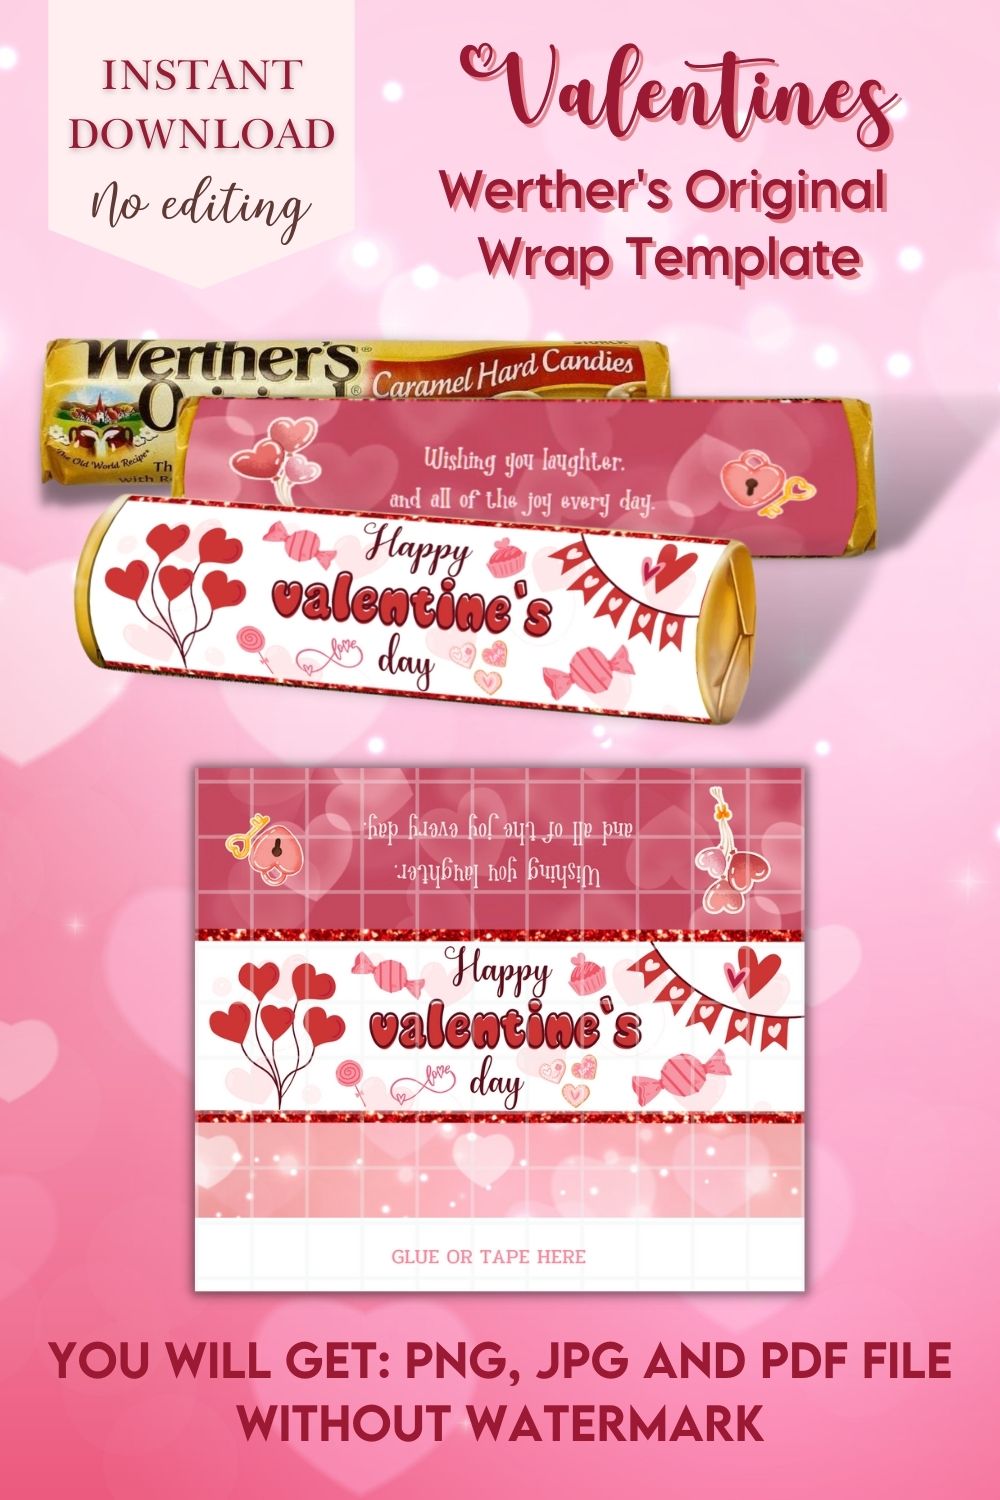 Valentines Werther's Original Wrap Template pinterest image.